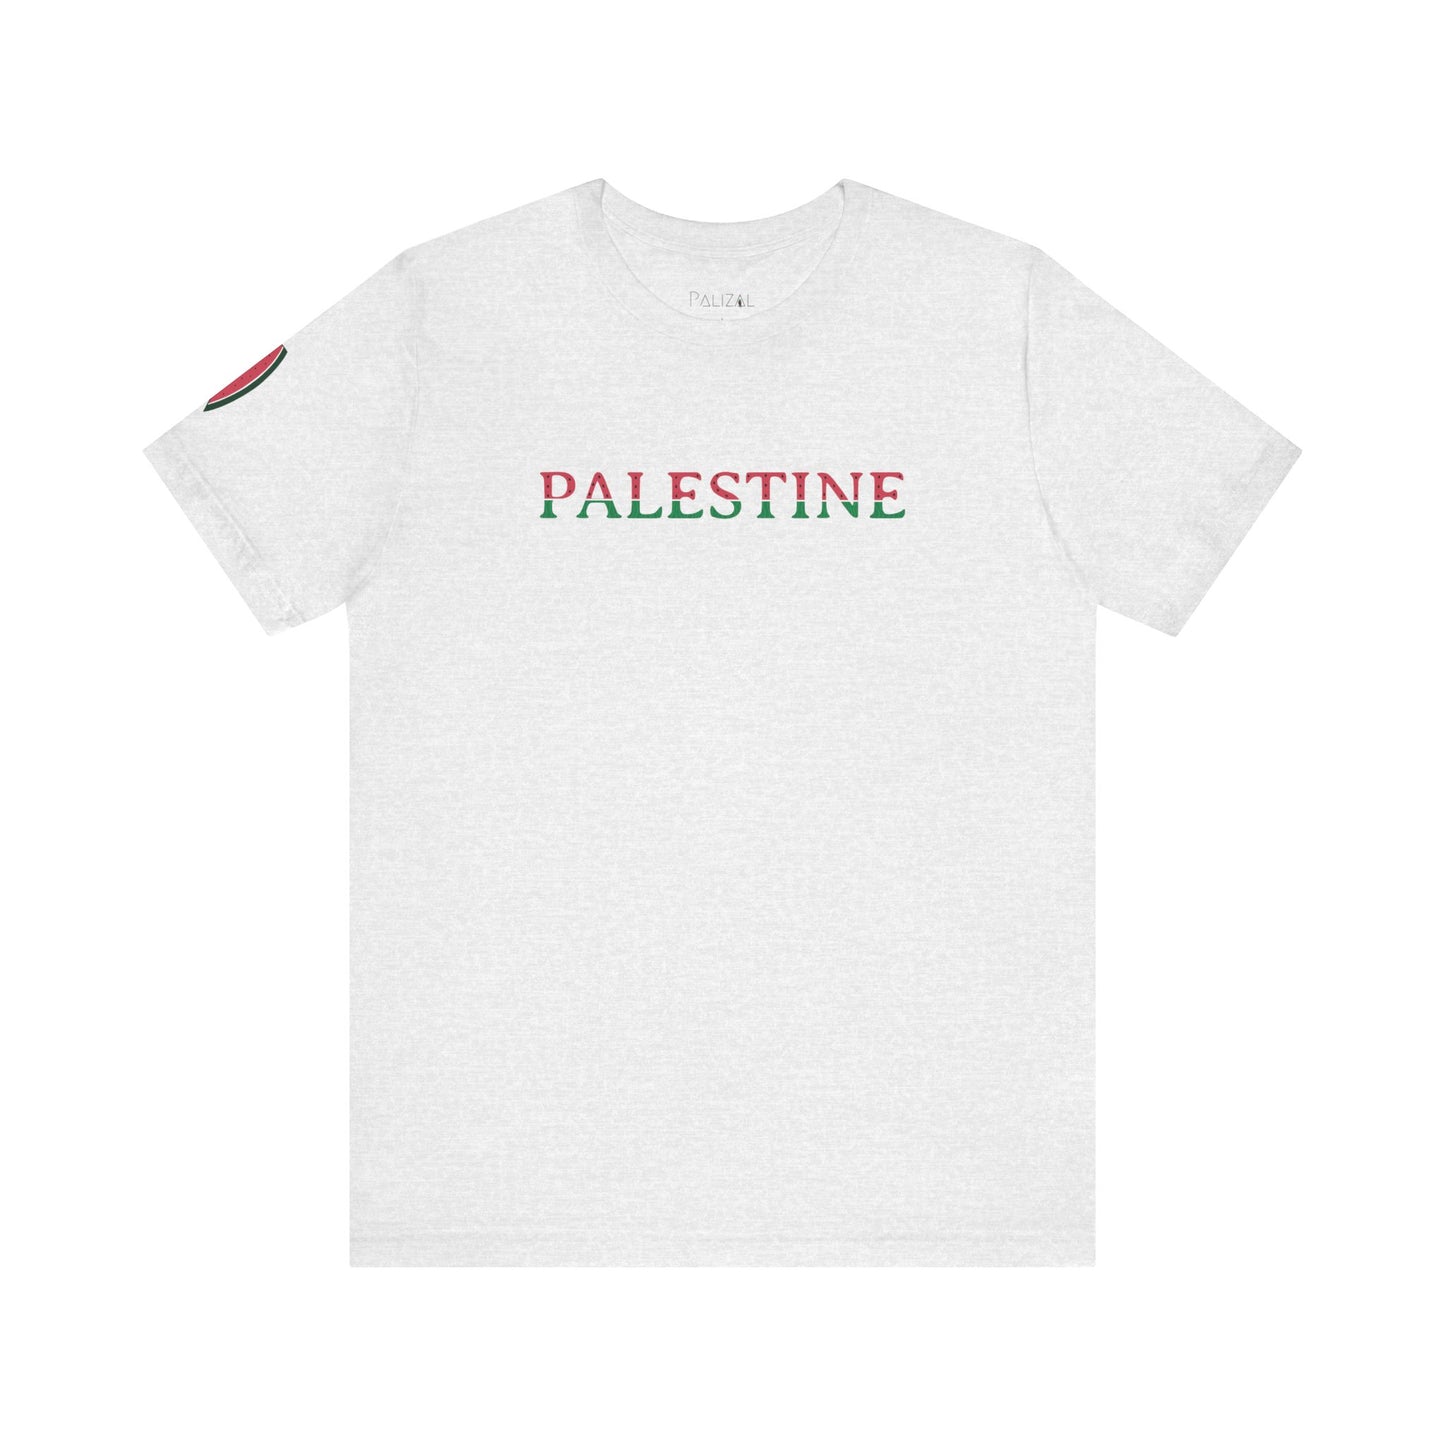 Sandia Palestina Tee